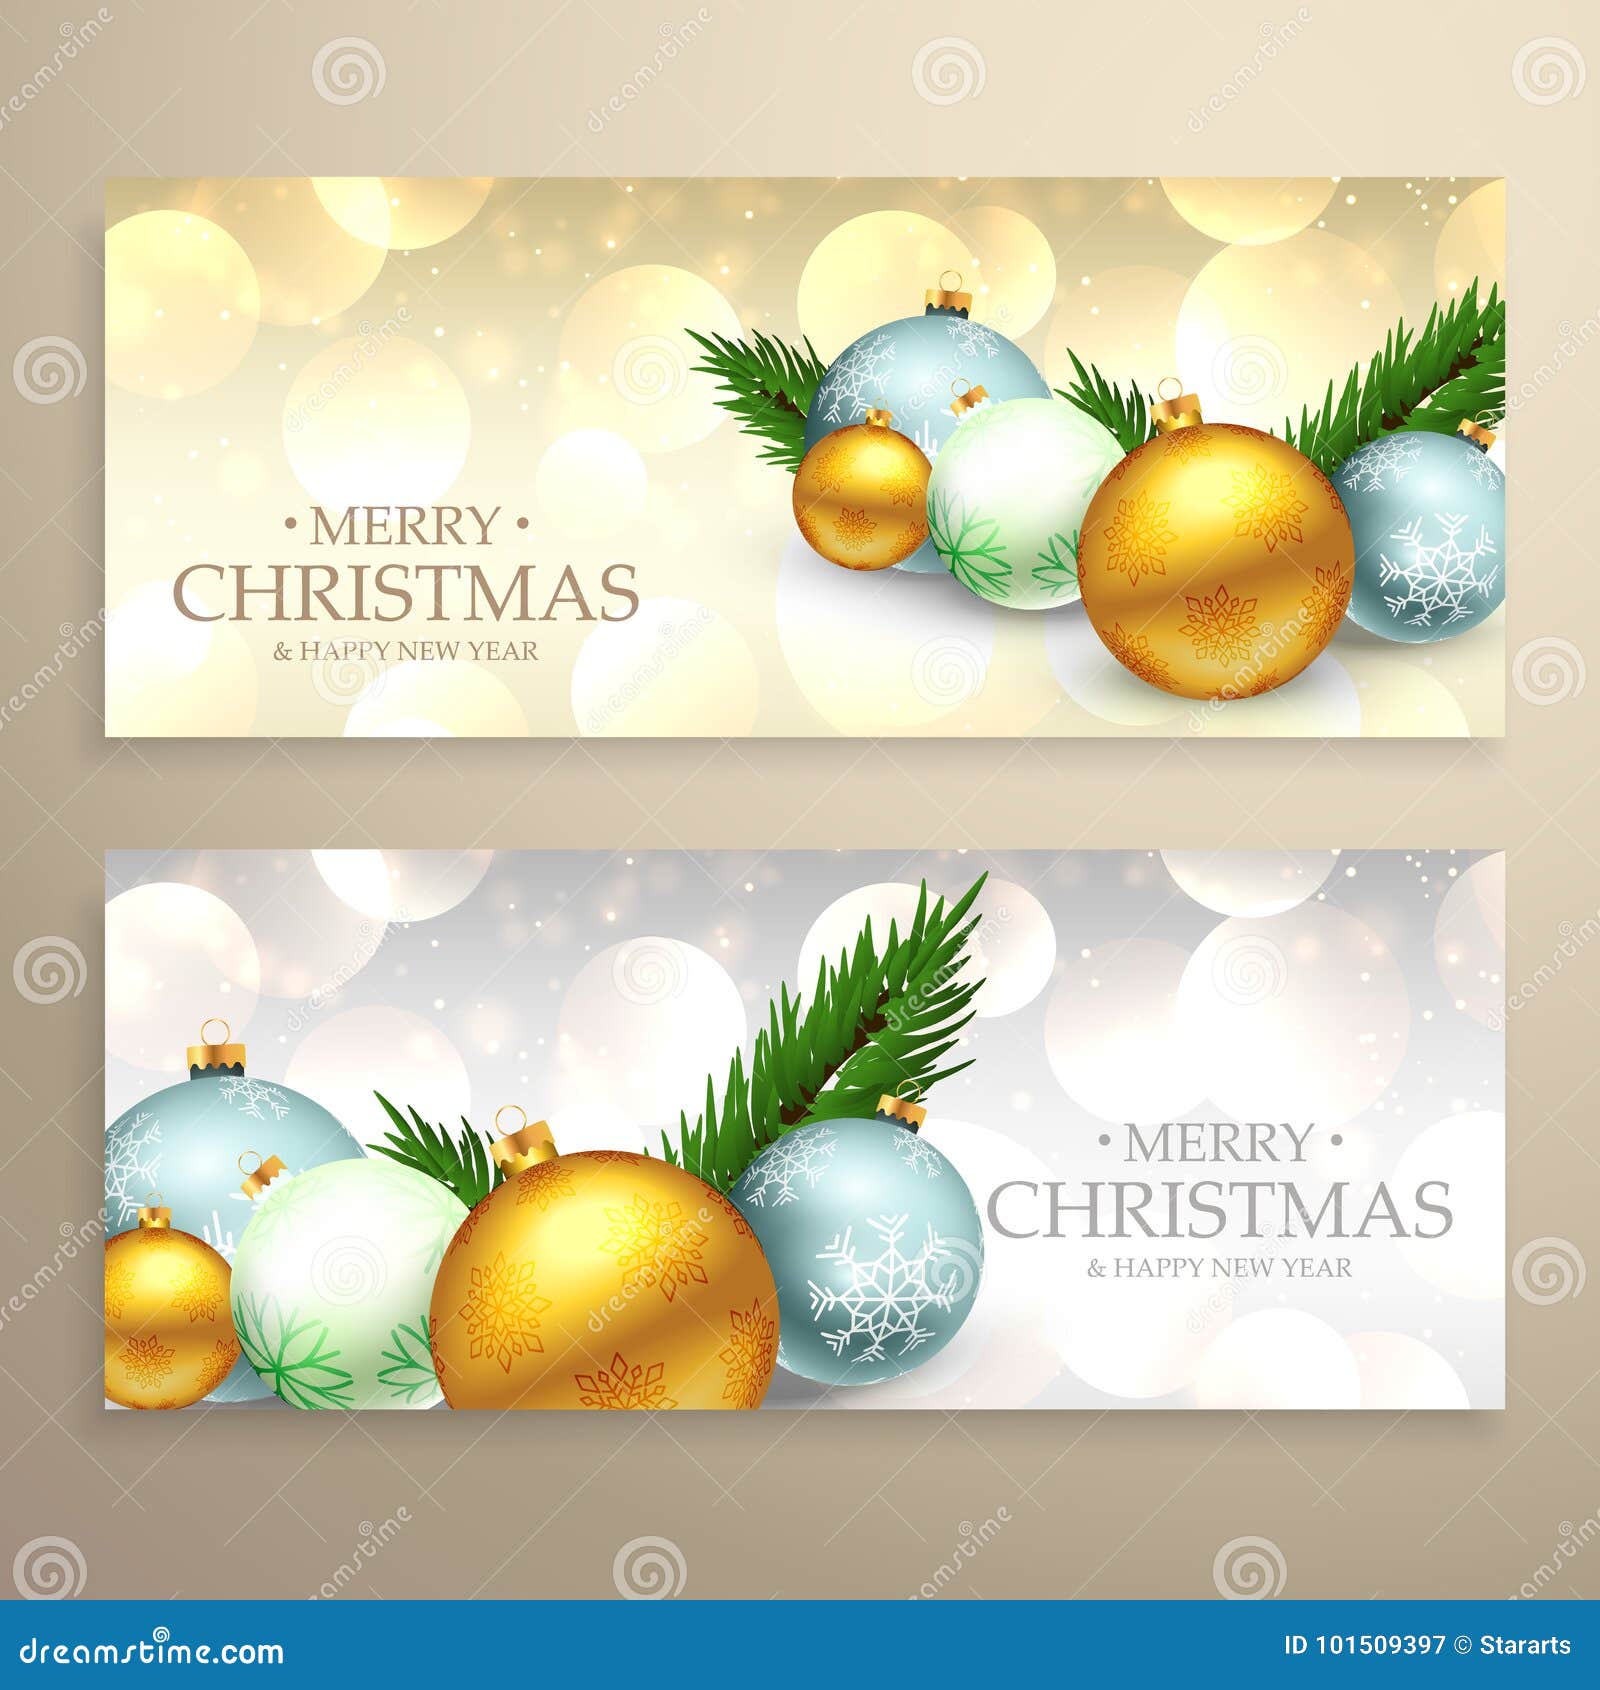 Christmas Banners Set with Realistic Xmas Balls Stock Vector ...